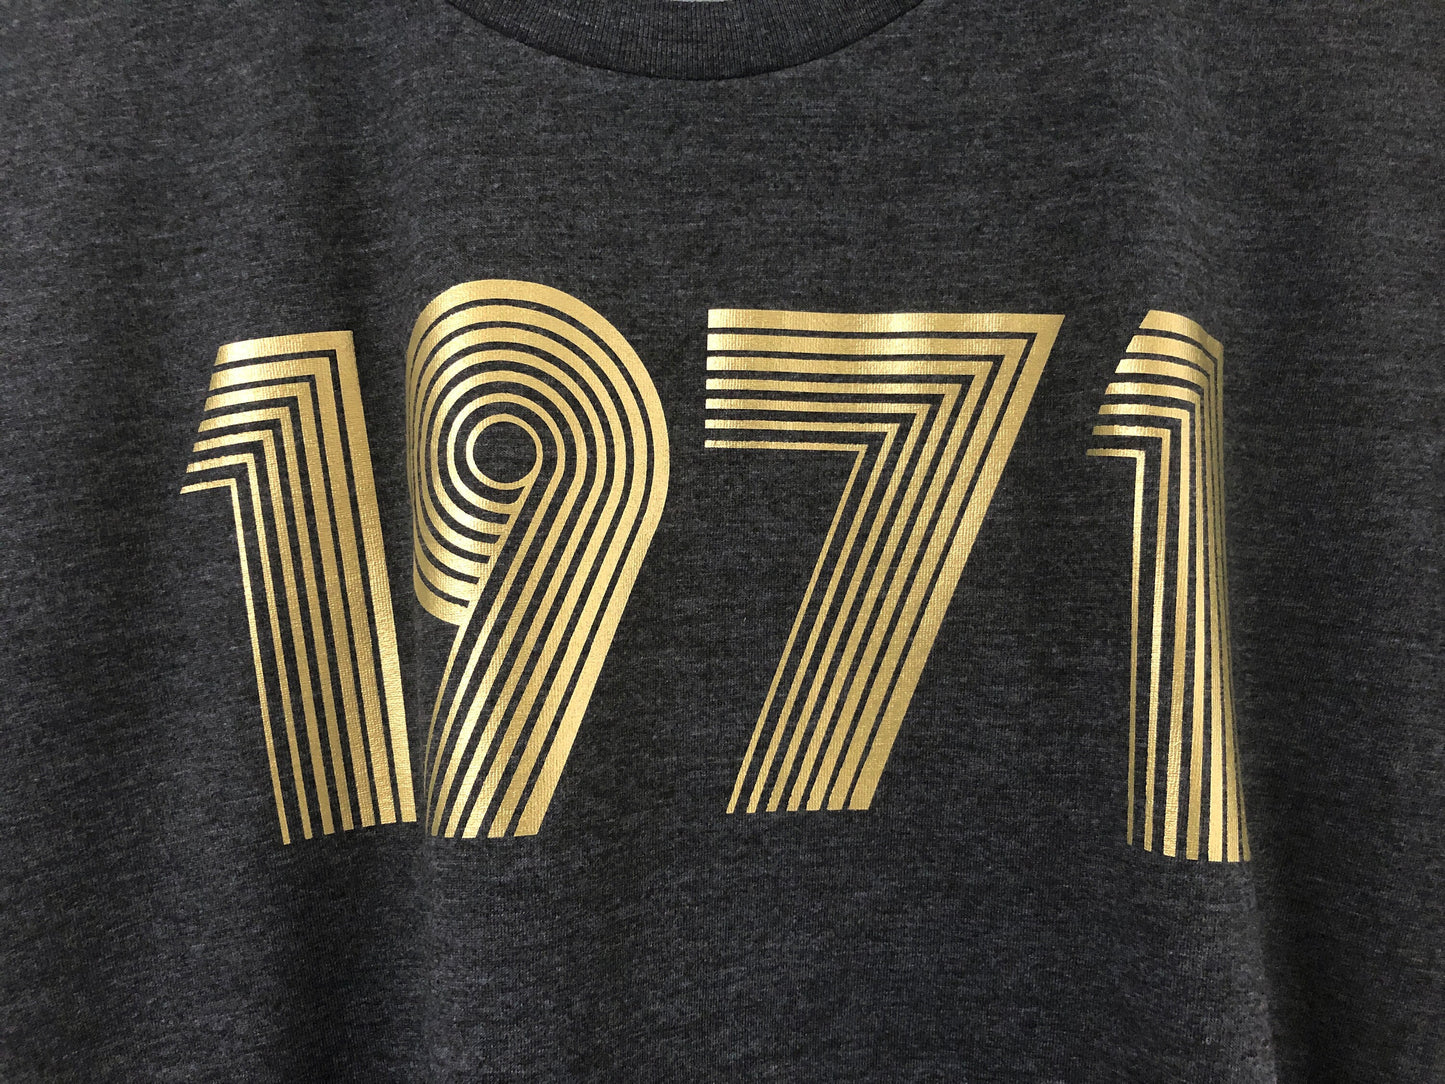 1971 Sweatshirt Metallic Gold or Silver Foil, 51st Birthday Gift Sweater in Retro & Vintage 70s style, Fiftieth Unisex Jumper Top